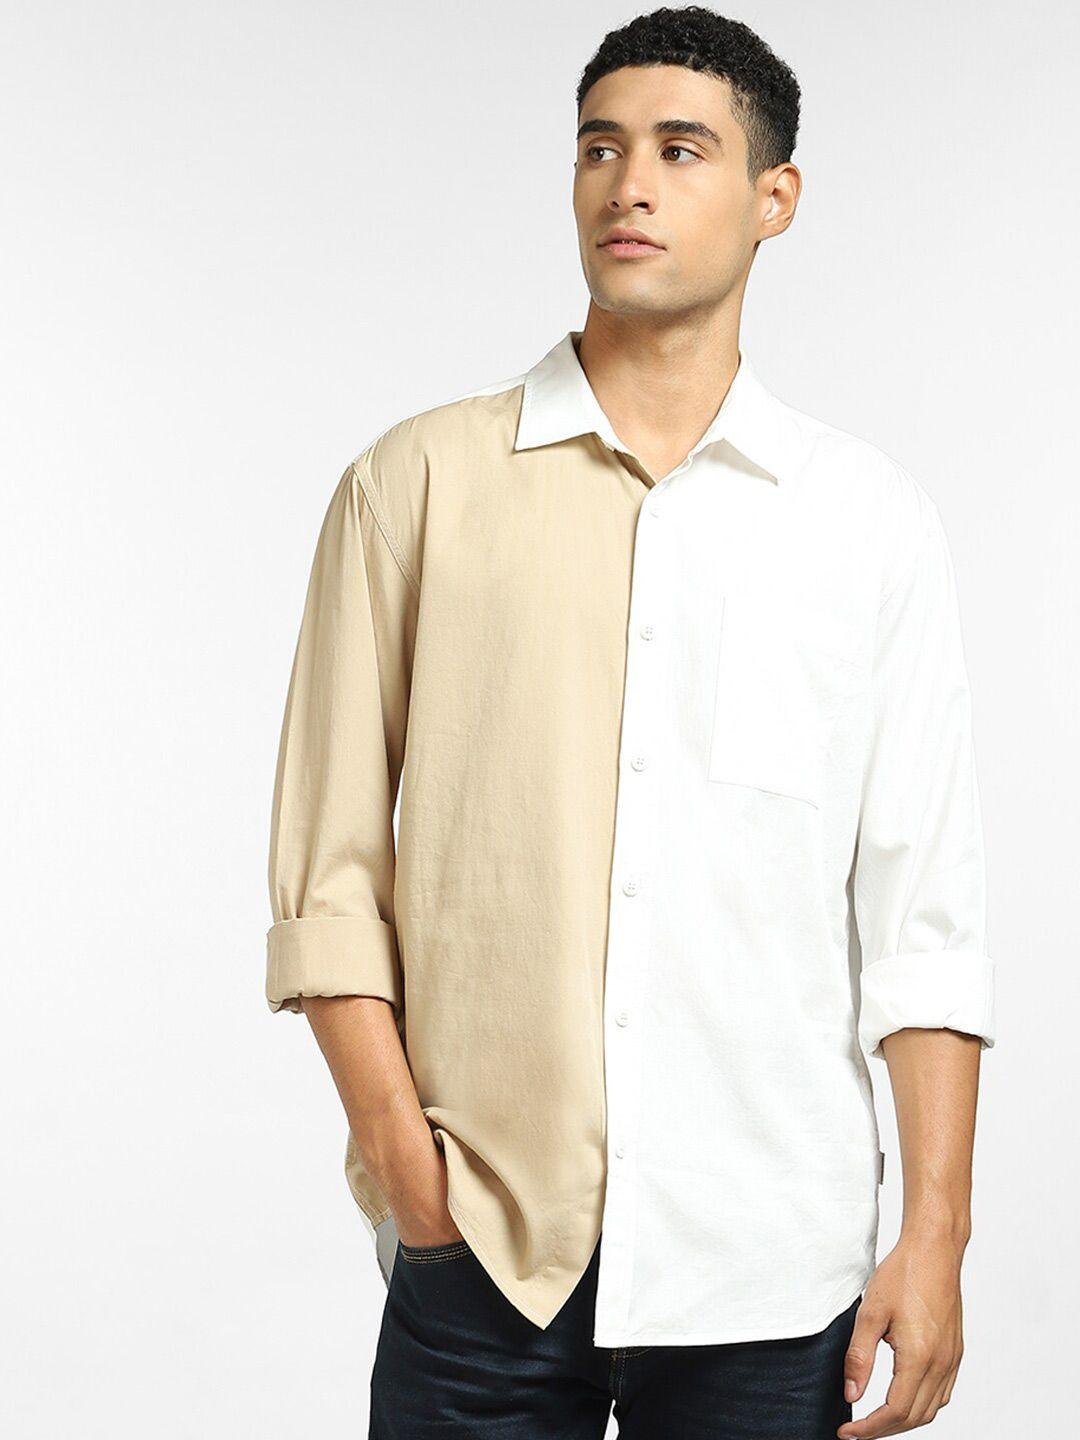 jack & jones men white & beige colourblocked casual shirt